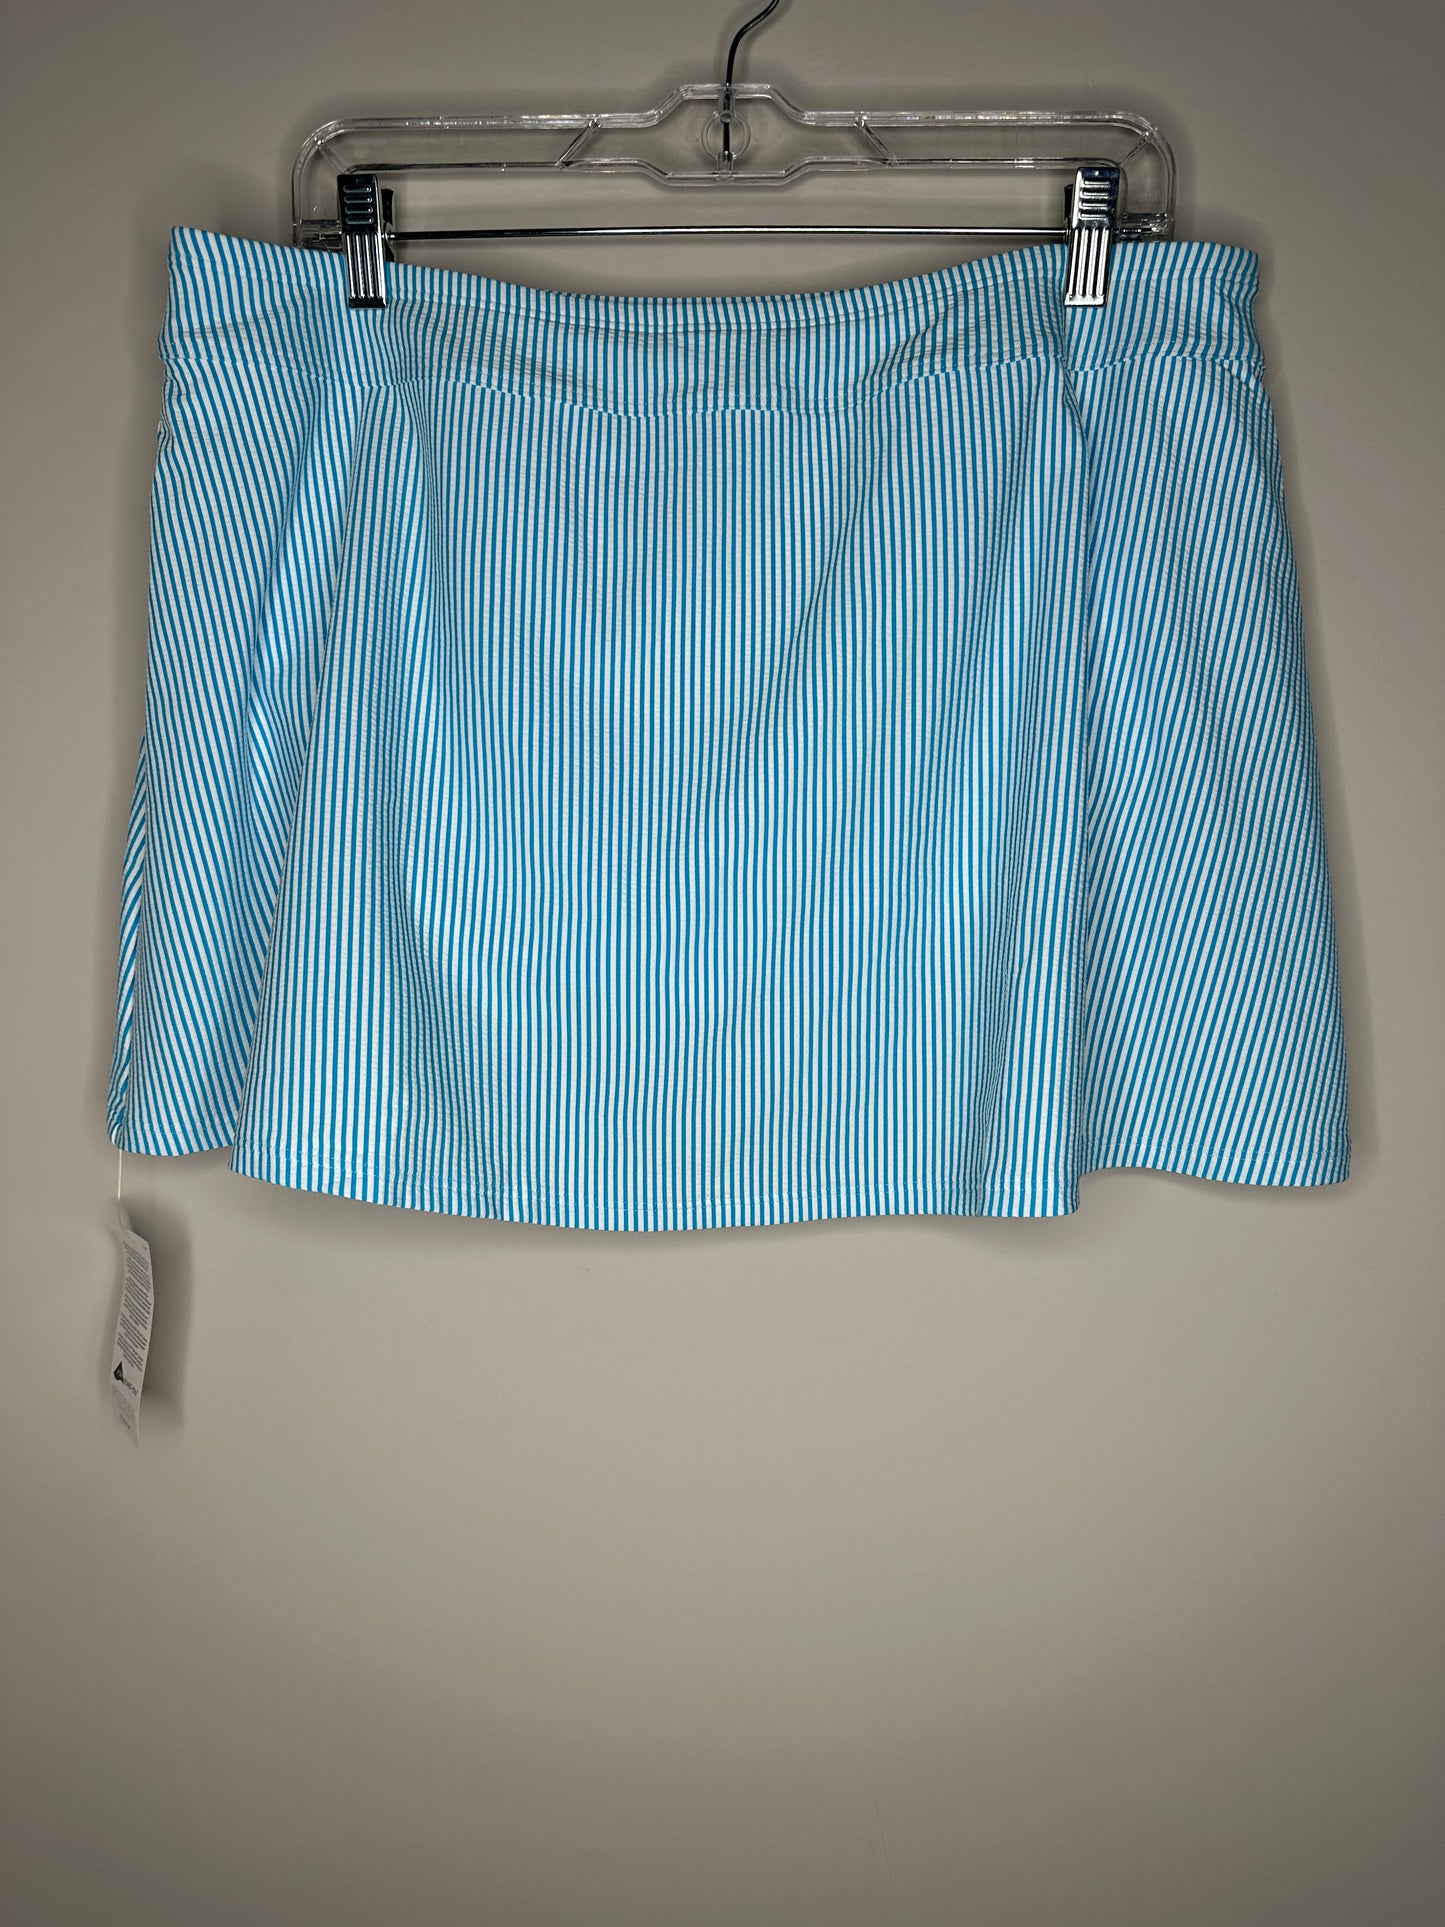 Lands' End Size 16W Turquoise Stripe Swim Skirt Swim Bottoms, new/NWT